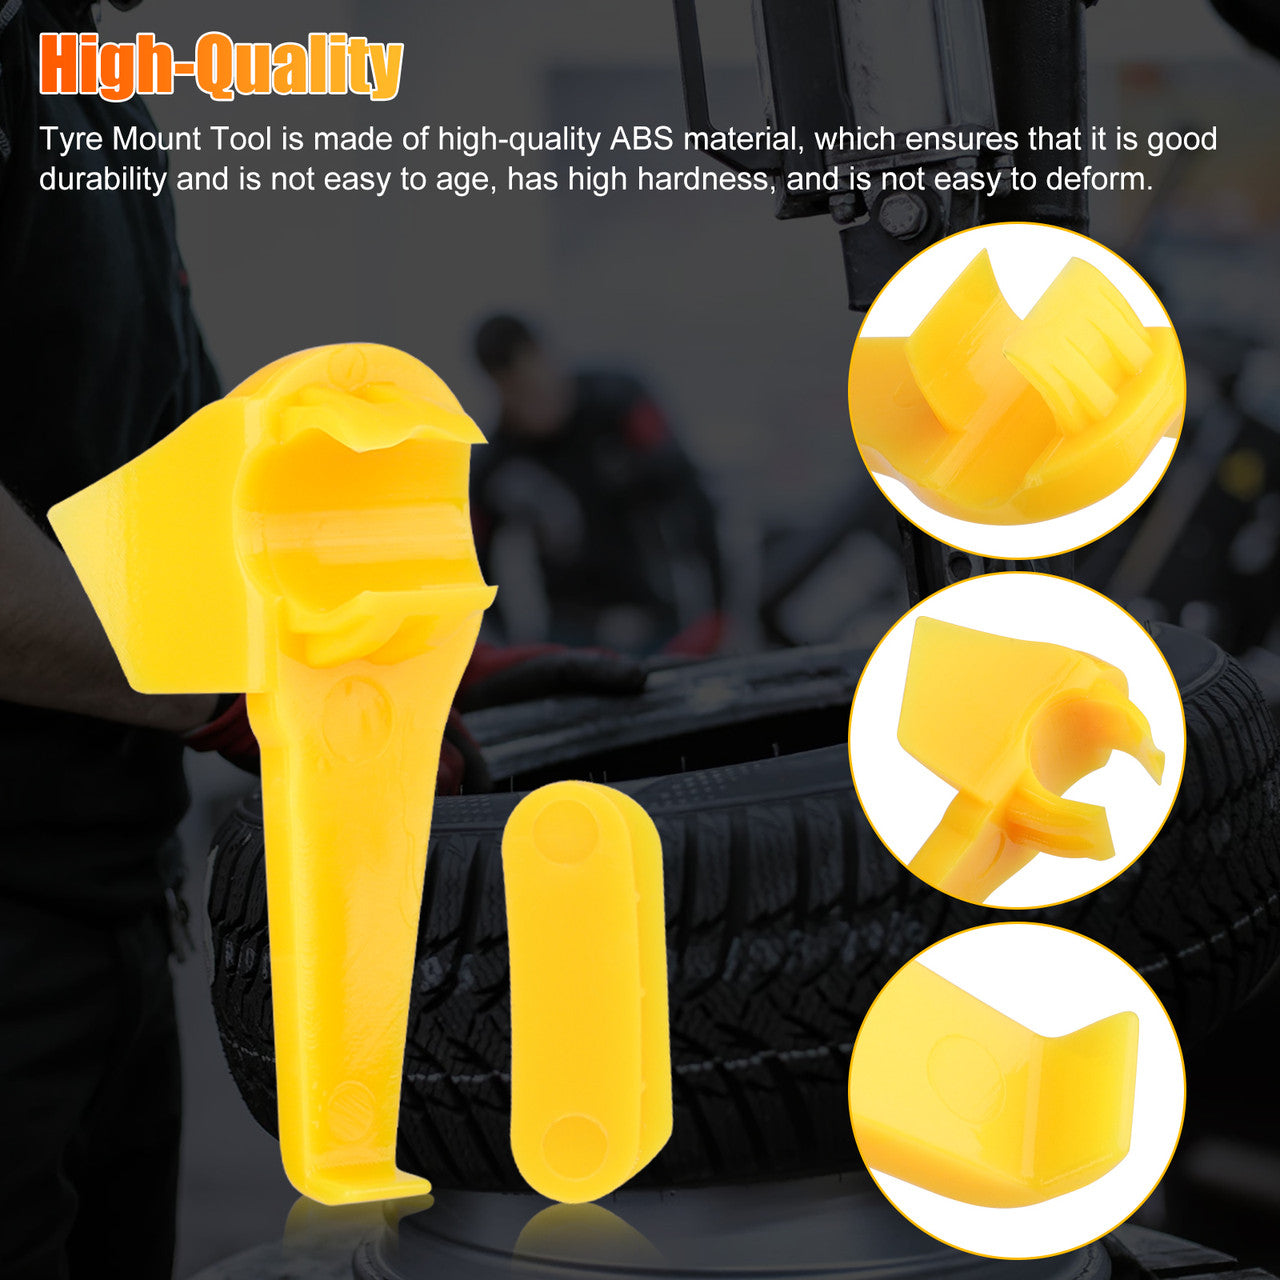 12 Packs Tire Mount Demount Duck Head Insert Rim Protector - Tire Changer Part Insert Rim Protector Tire Wheel Repair Tools (Yellow)